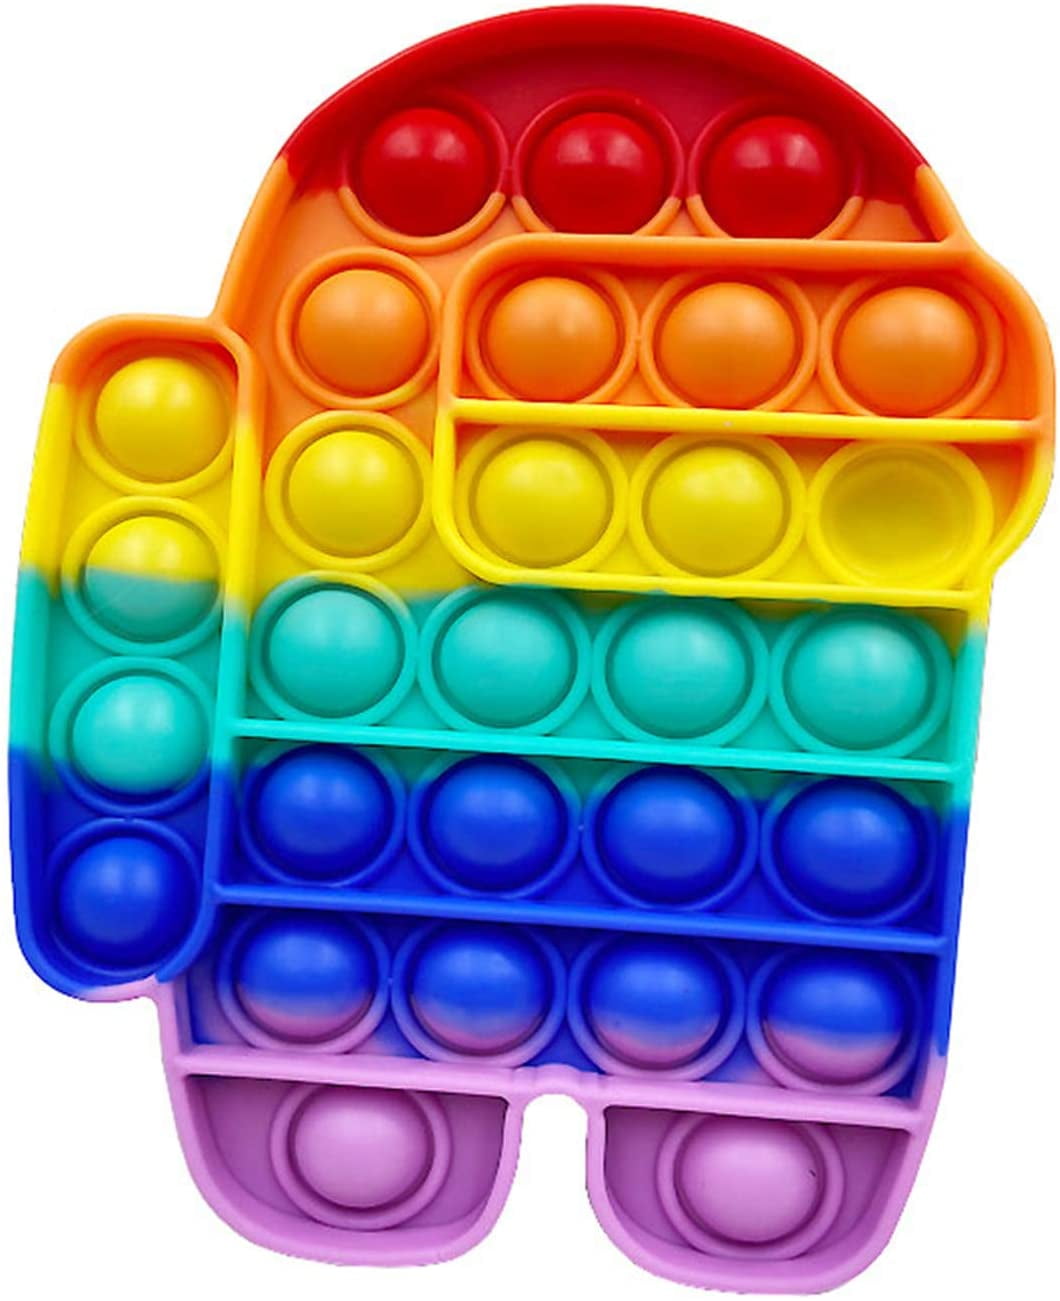 Details about   Push Pop Bubble Fidget Toy Sensory Stress Relief Game Gift